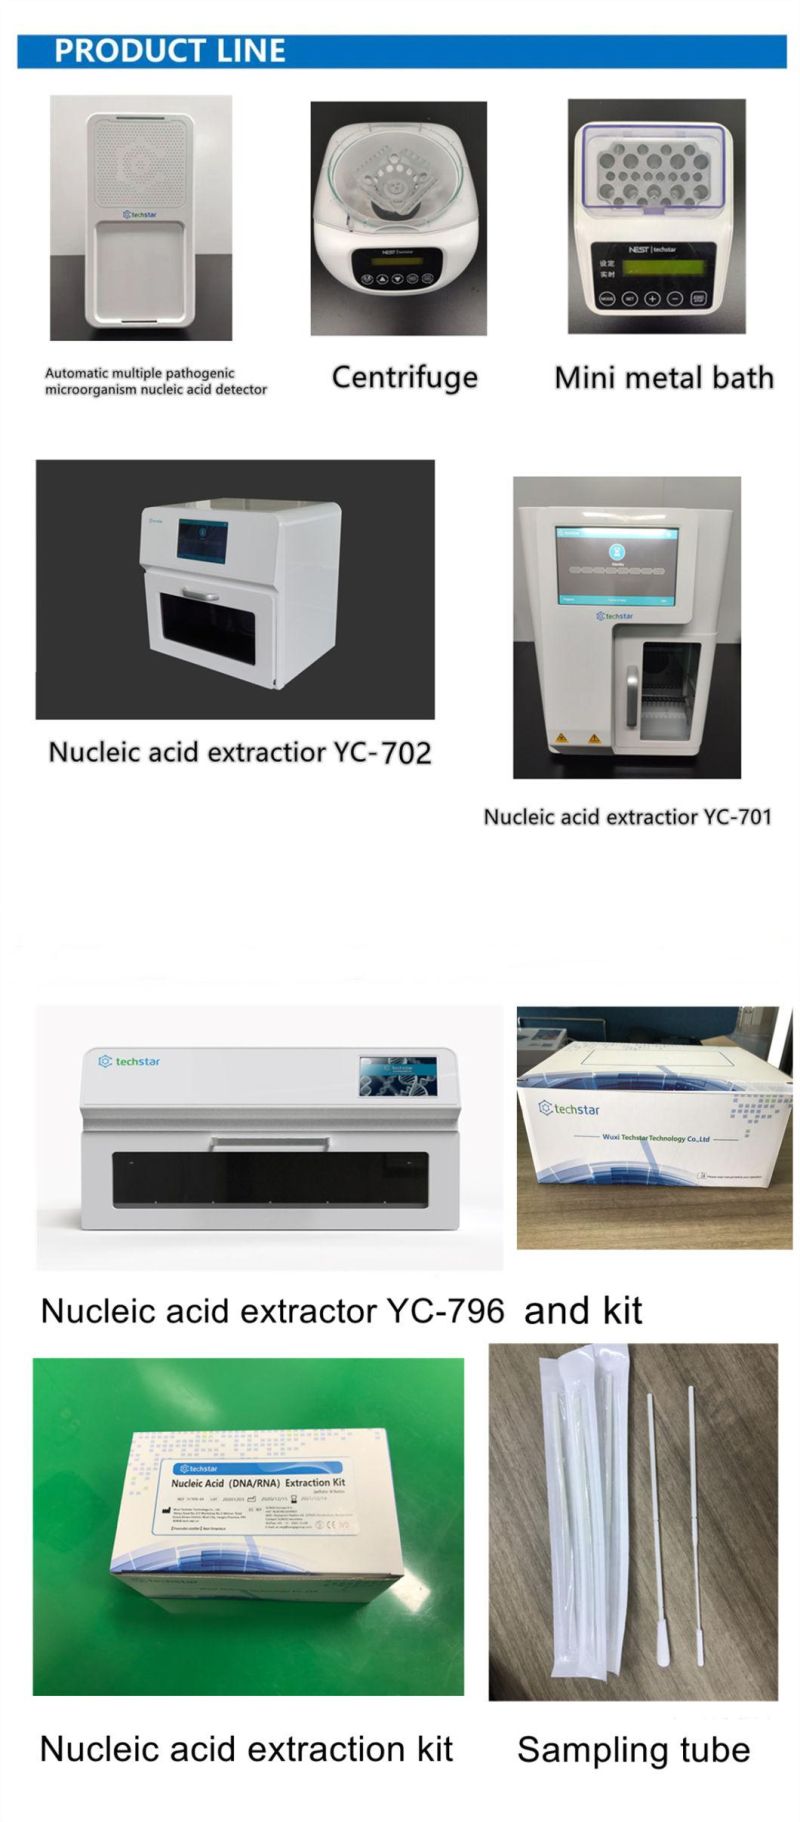 Techstar Medical Vtm Transport Medium Kit 3ml Inactivated Disposable Virus Sampling Tube